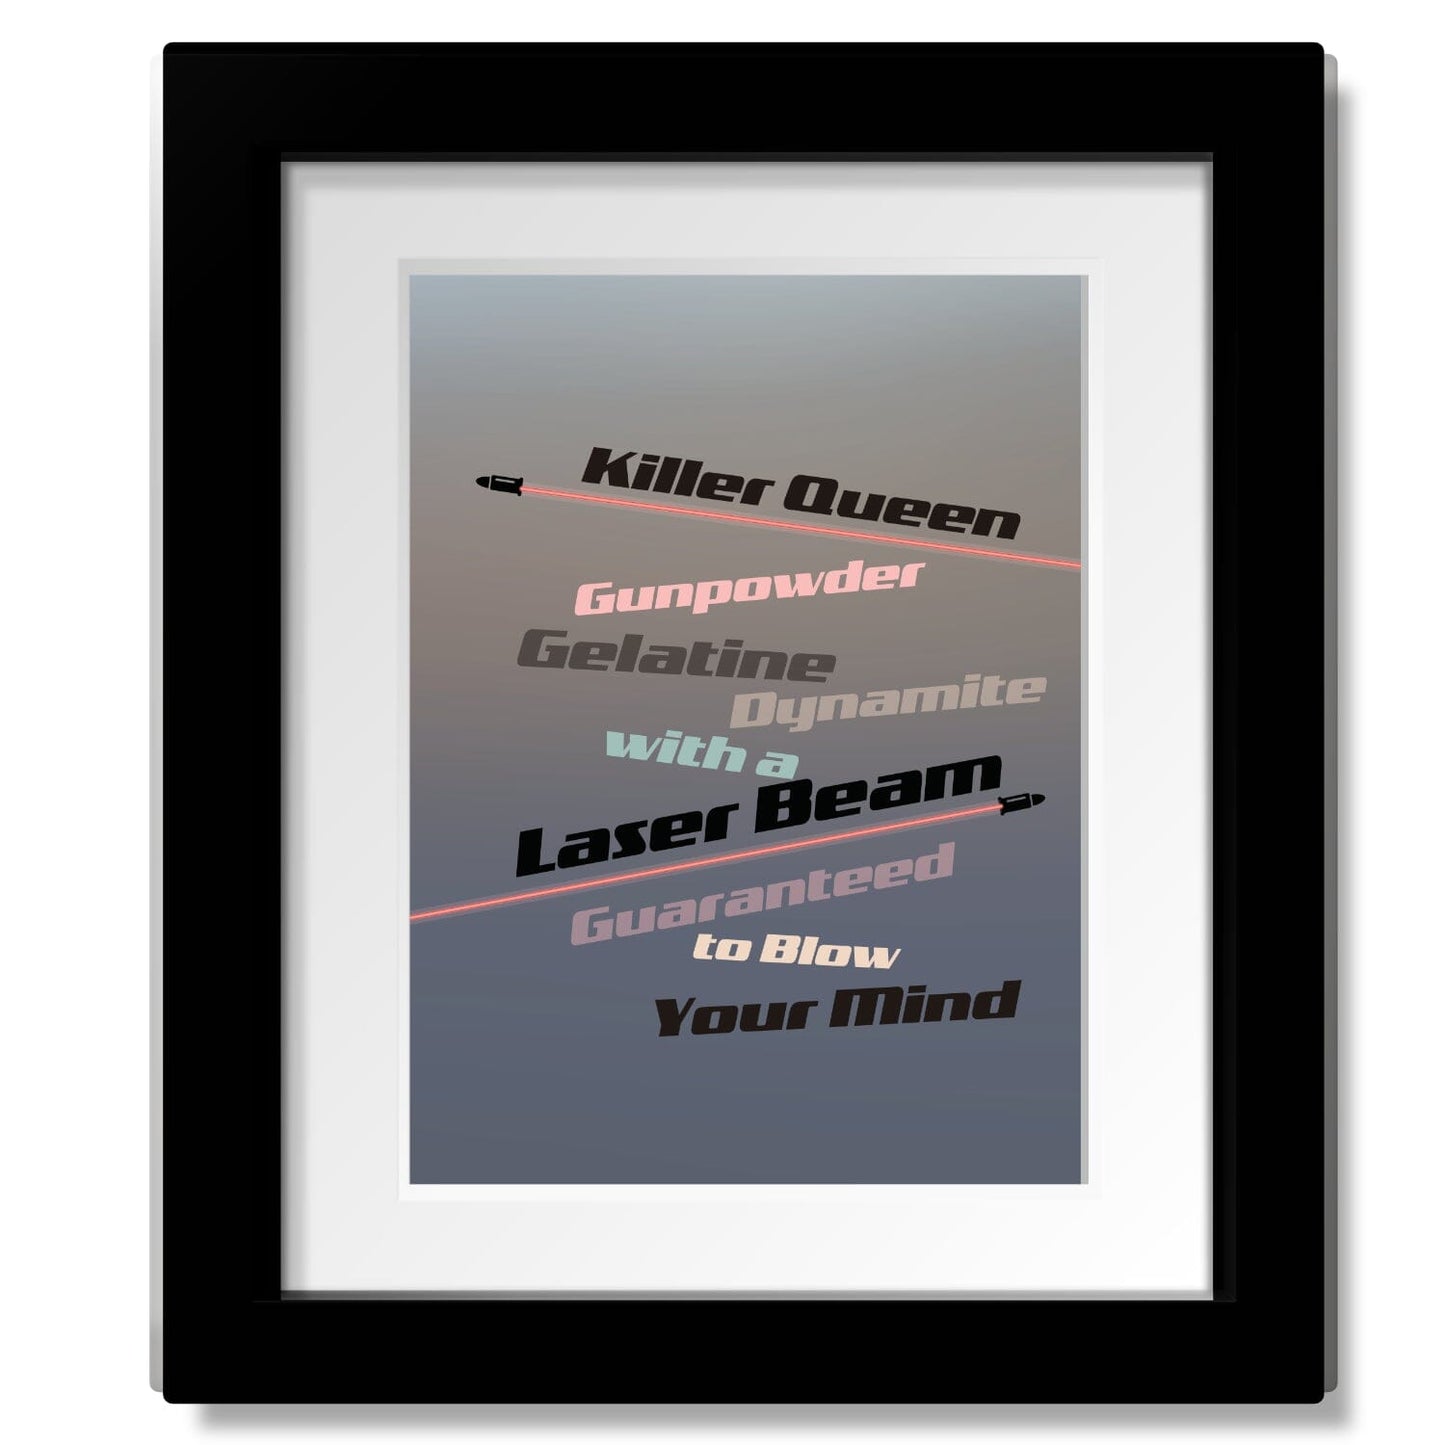 Killer Queen by Queen - Song Lyrics Inspired Art Wall Decor Song Lyrics Art Song Lyrics Art 8x10 Matted and Framed Print 